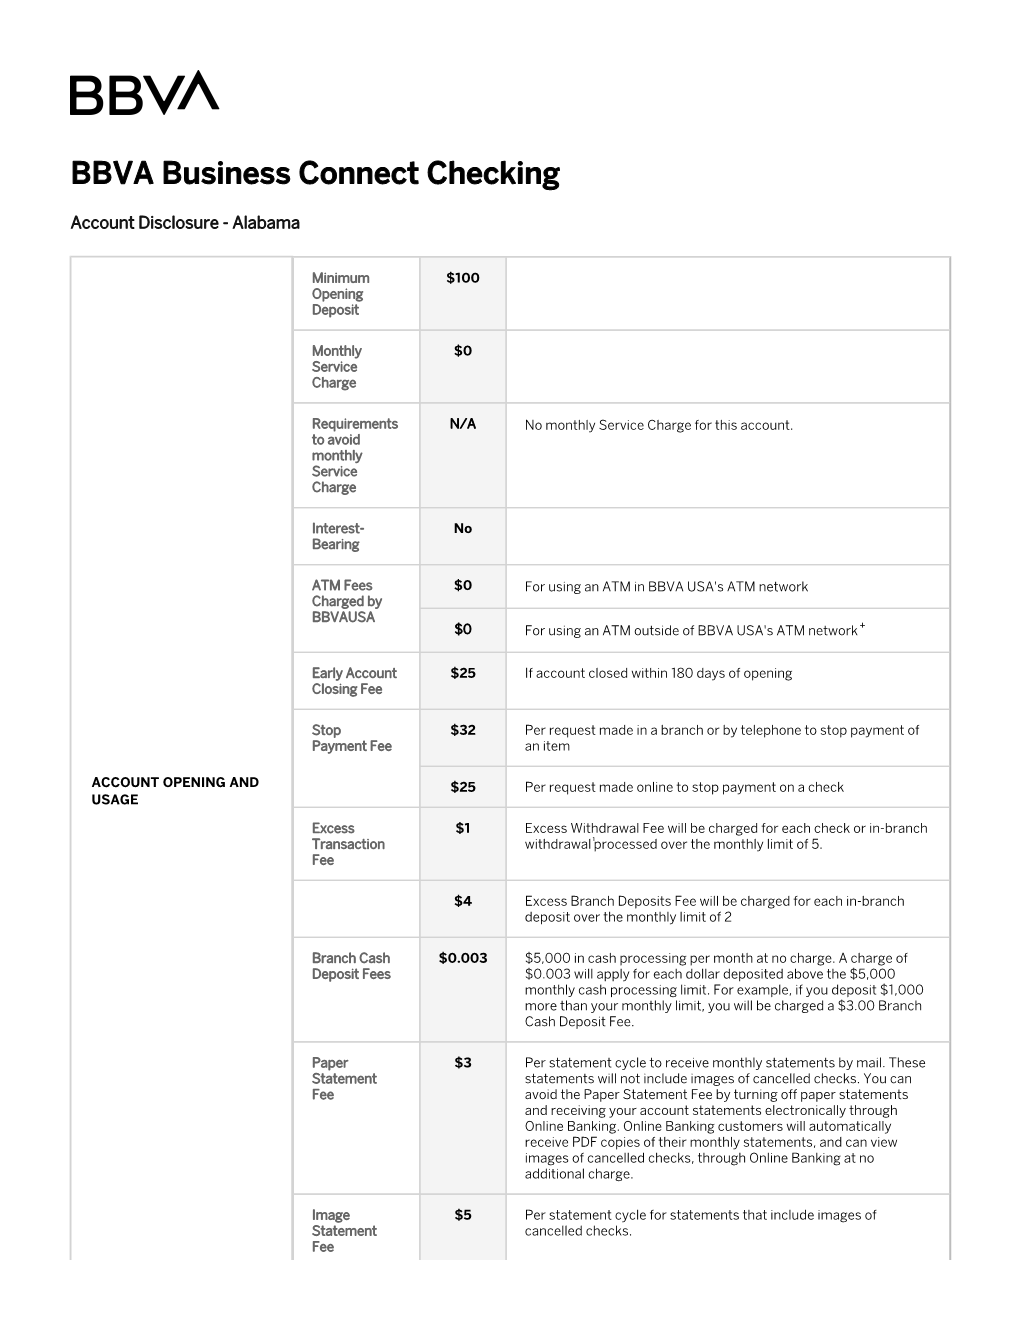 BBVA Business Connect Checking Account Disclosure | Alabama | BBVA